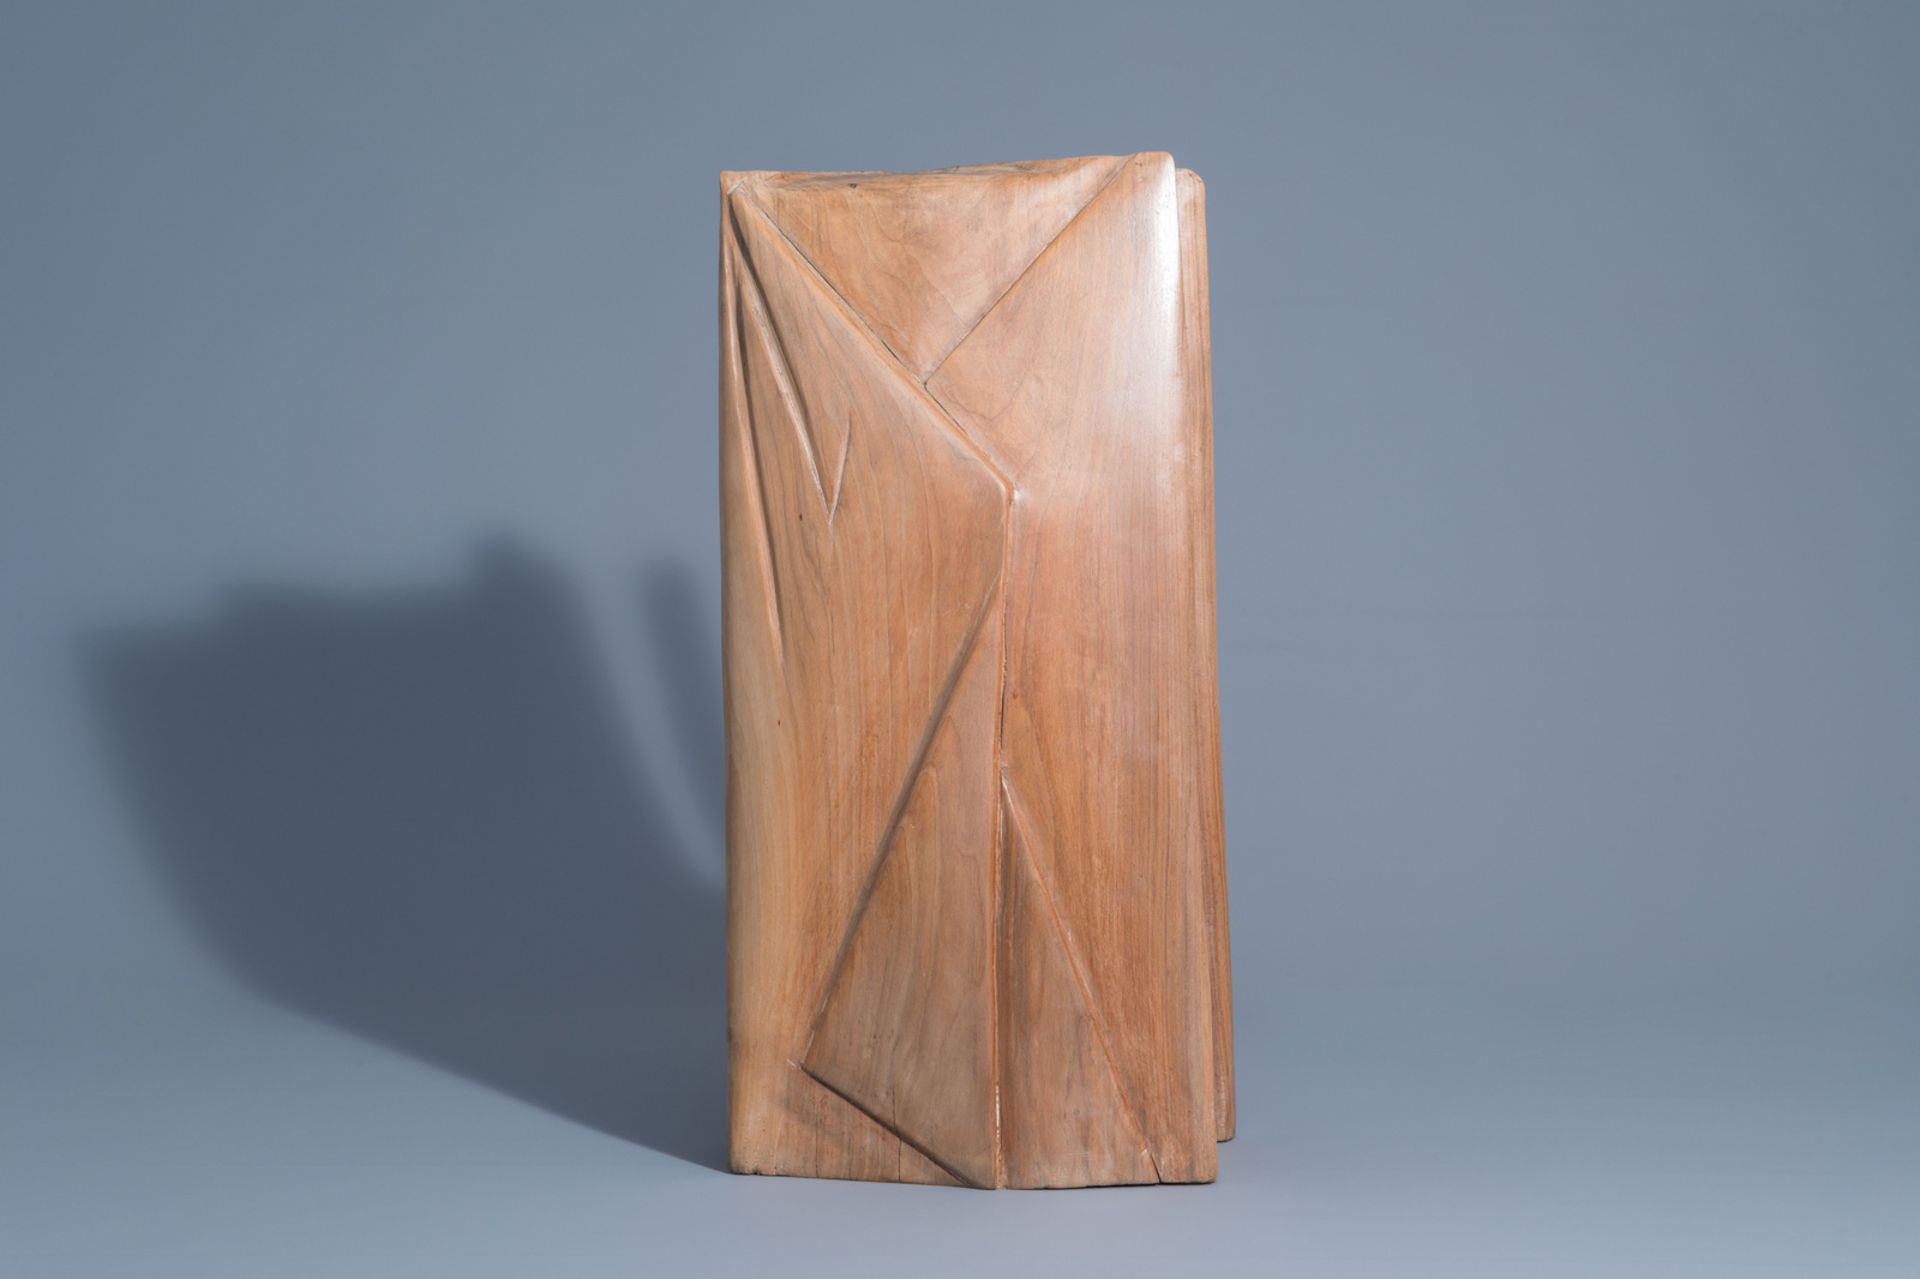 Monogrammed VDB (?): Untitled, wood sculpture - Image 2 of 8